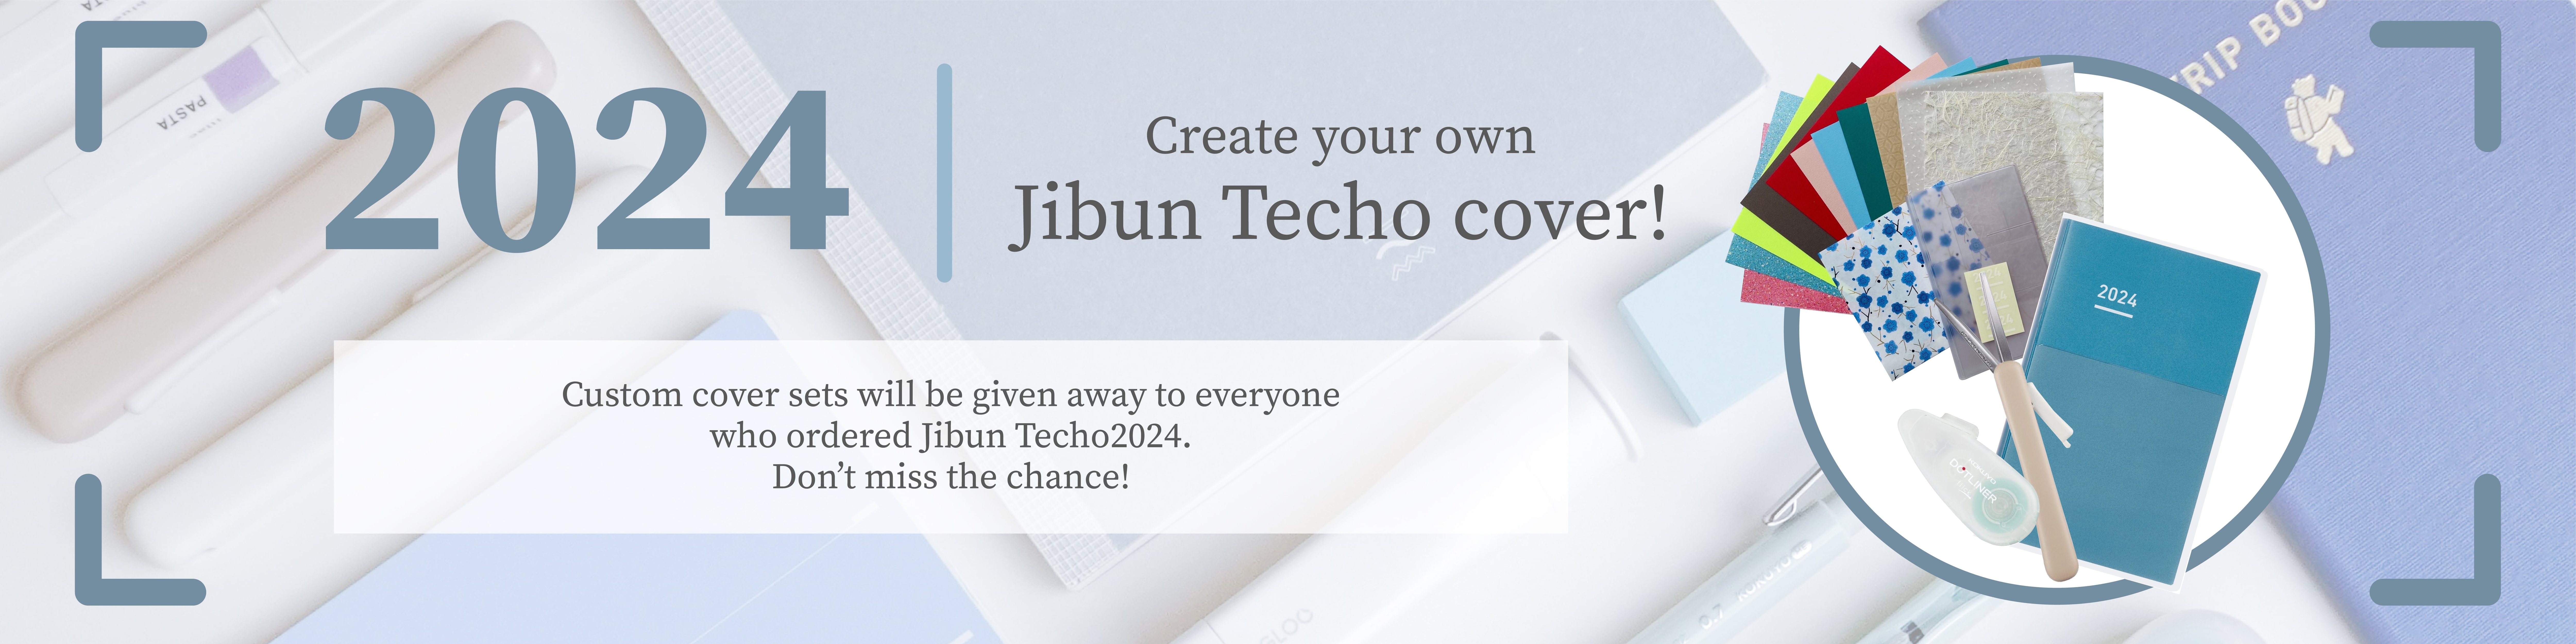 Jibun Techo Standard - First kit banner